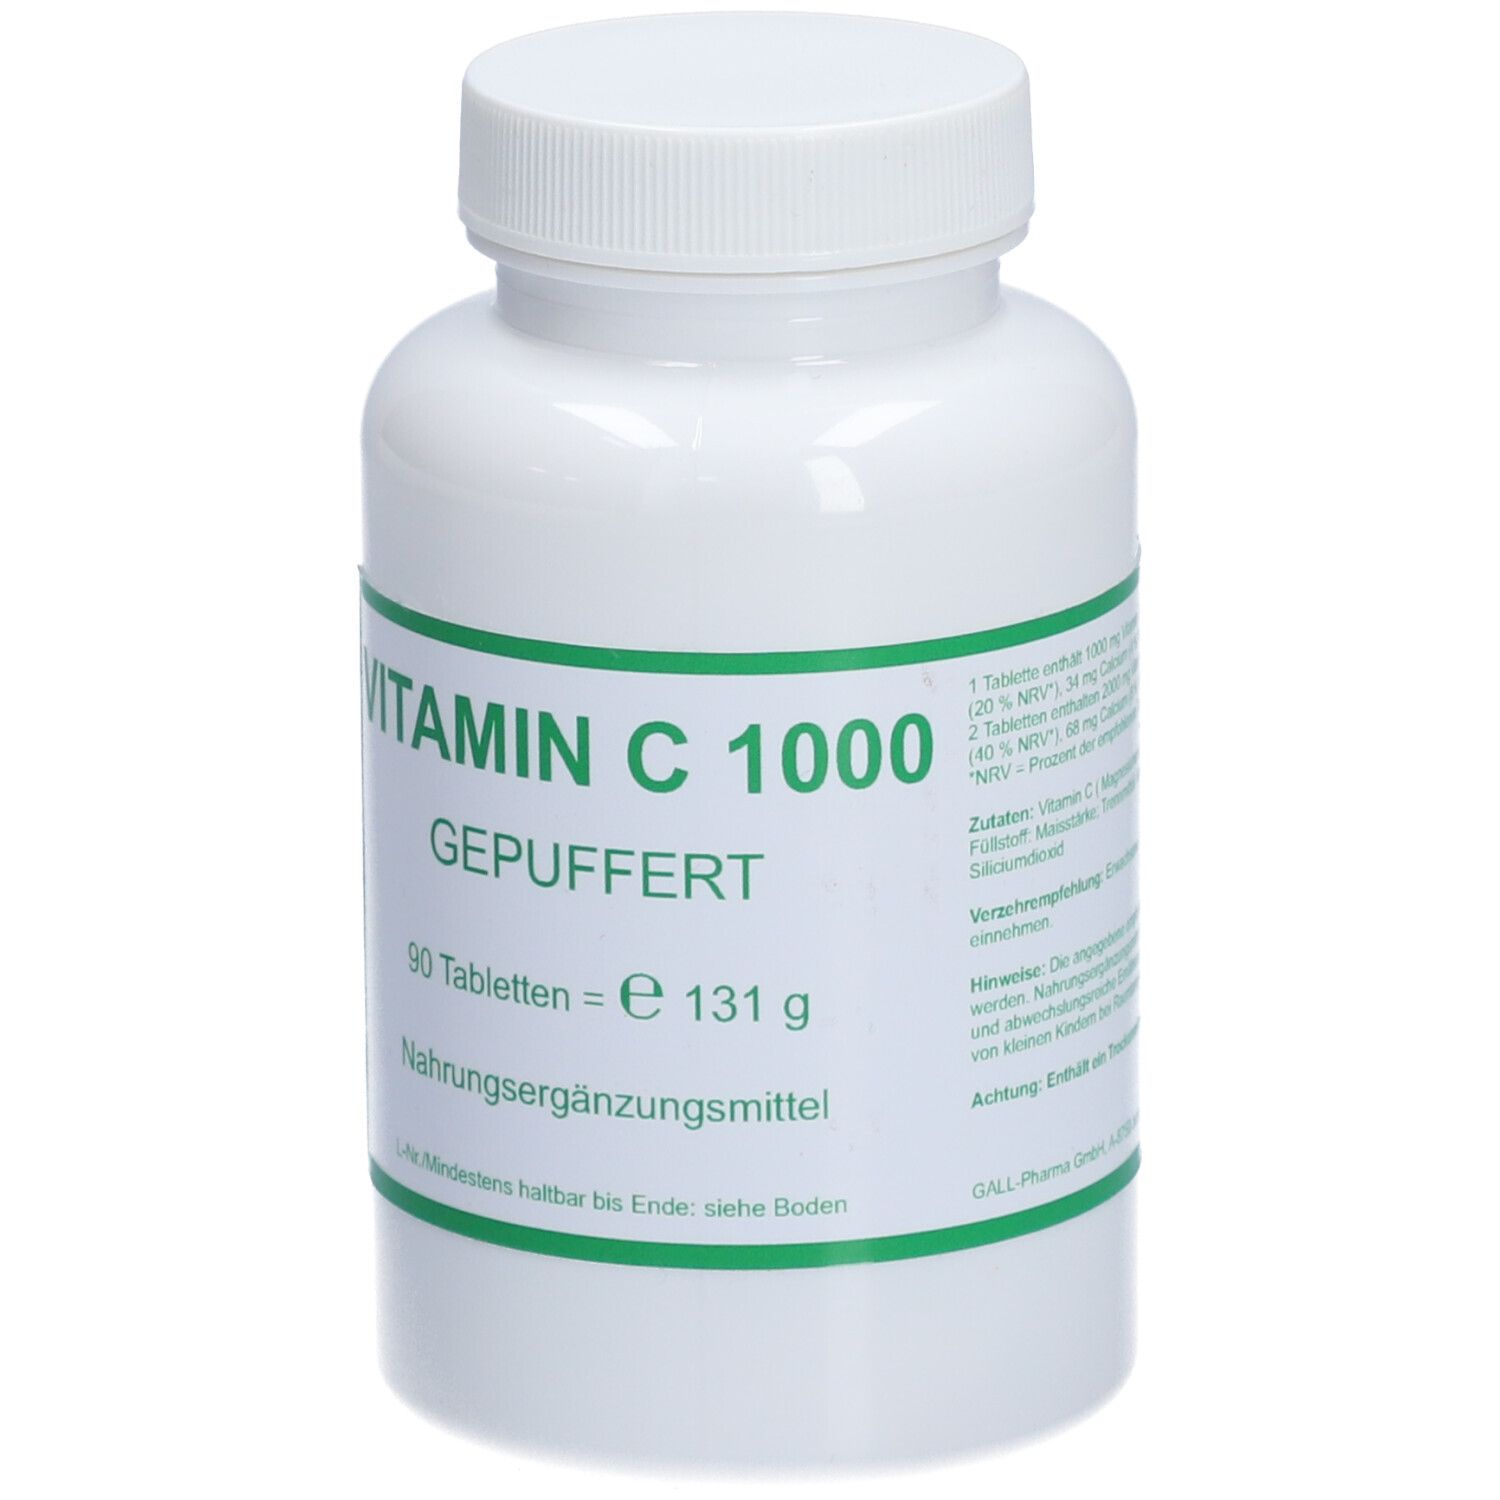 VITAMIN C 1000 gepuffert Tabletten